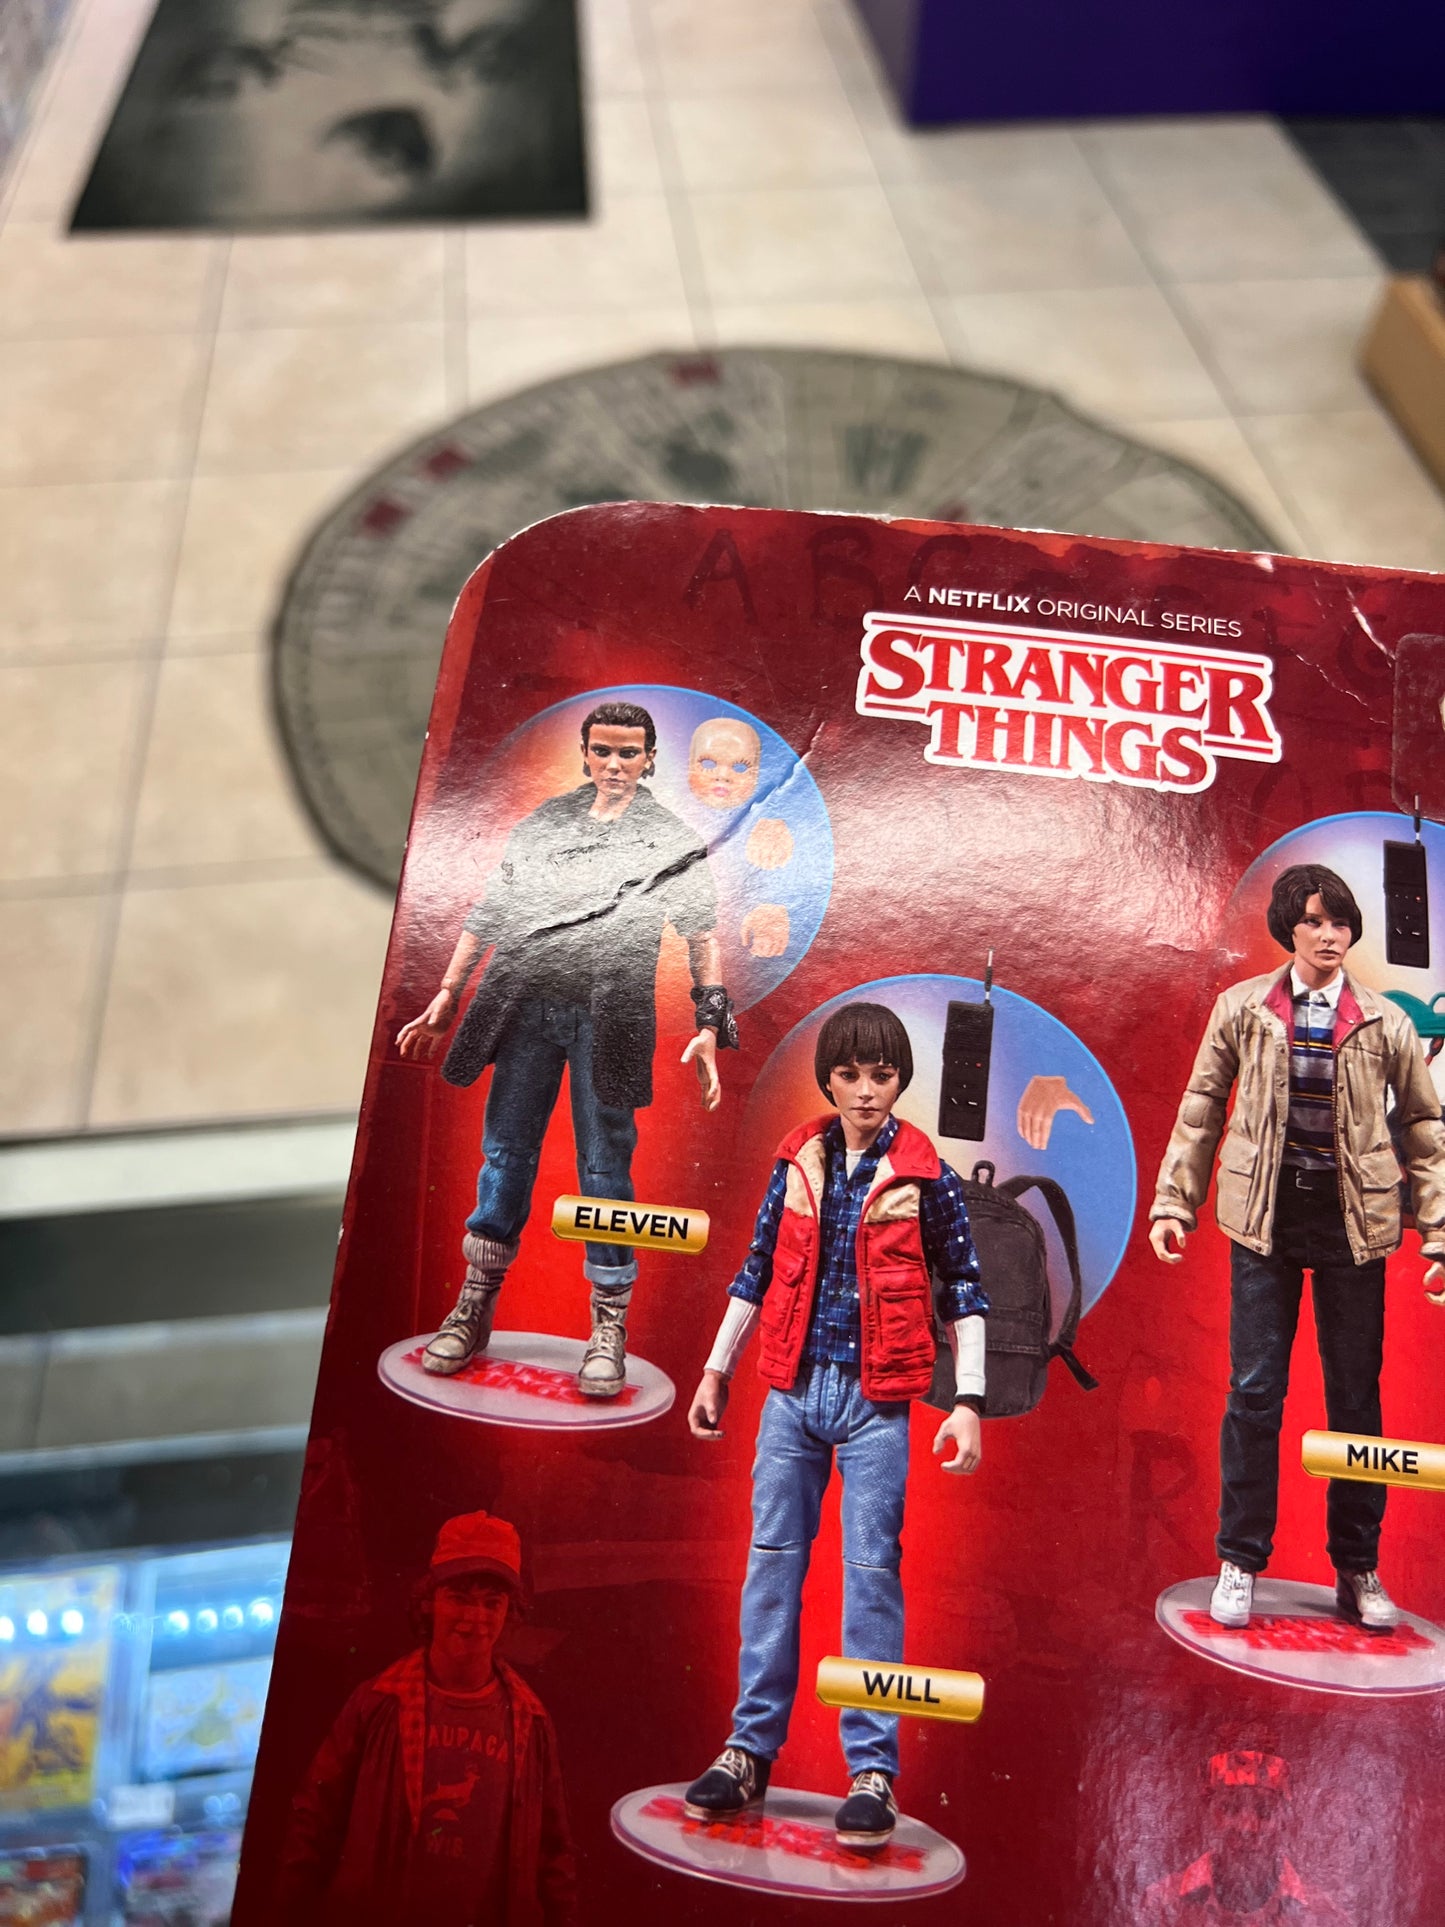 McFarlane Toys - Stranger Things - Mike - Action Figure - 2018